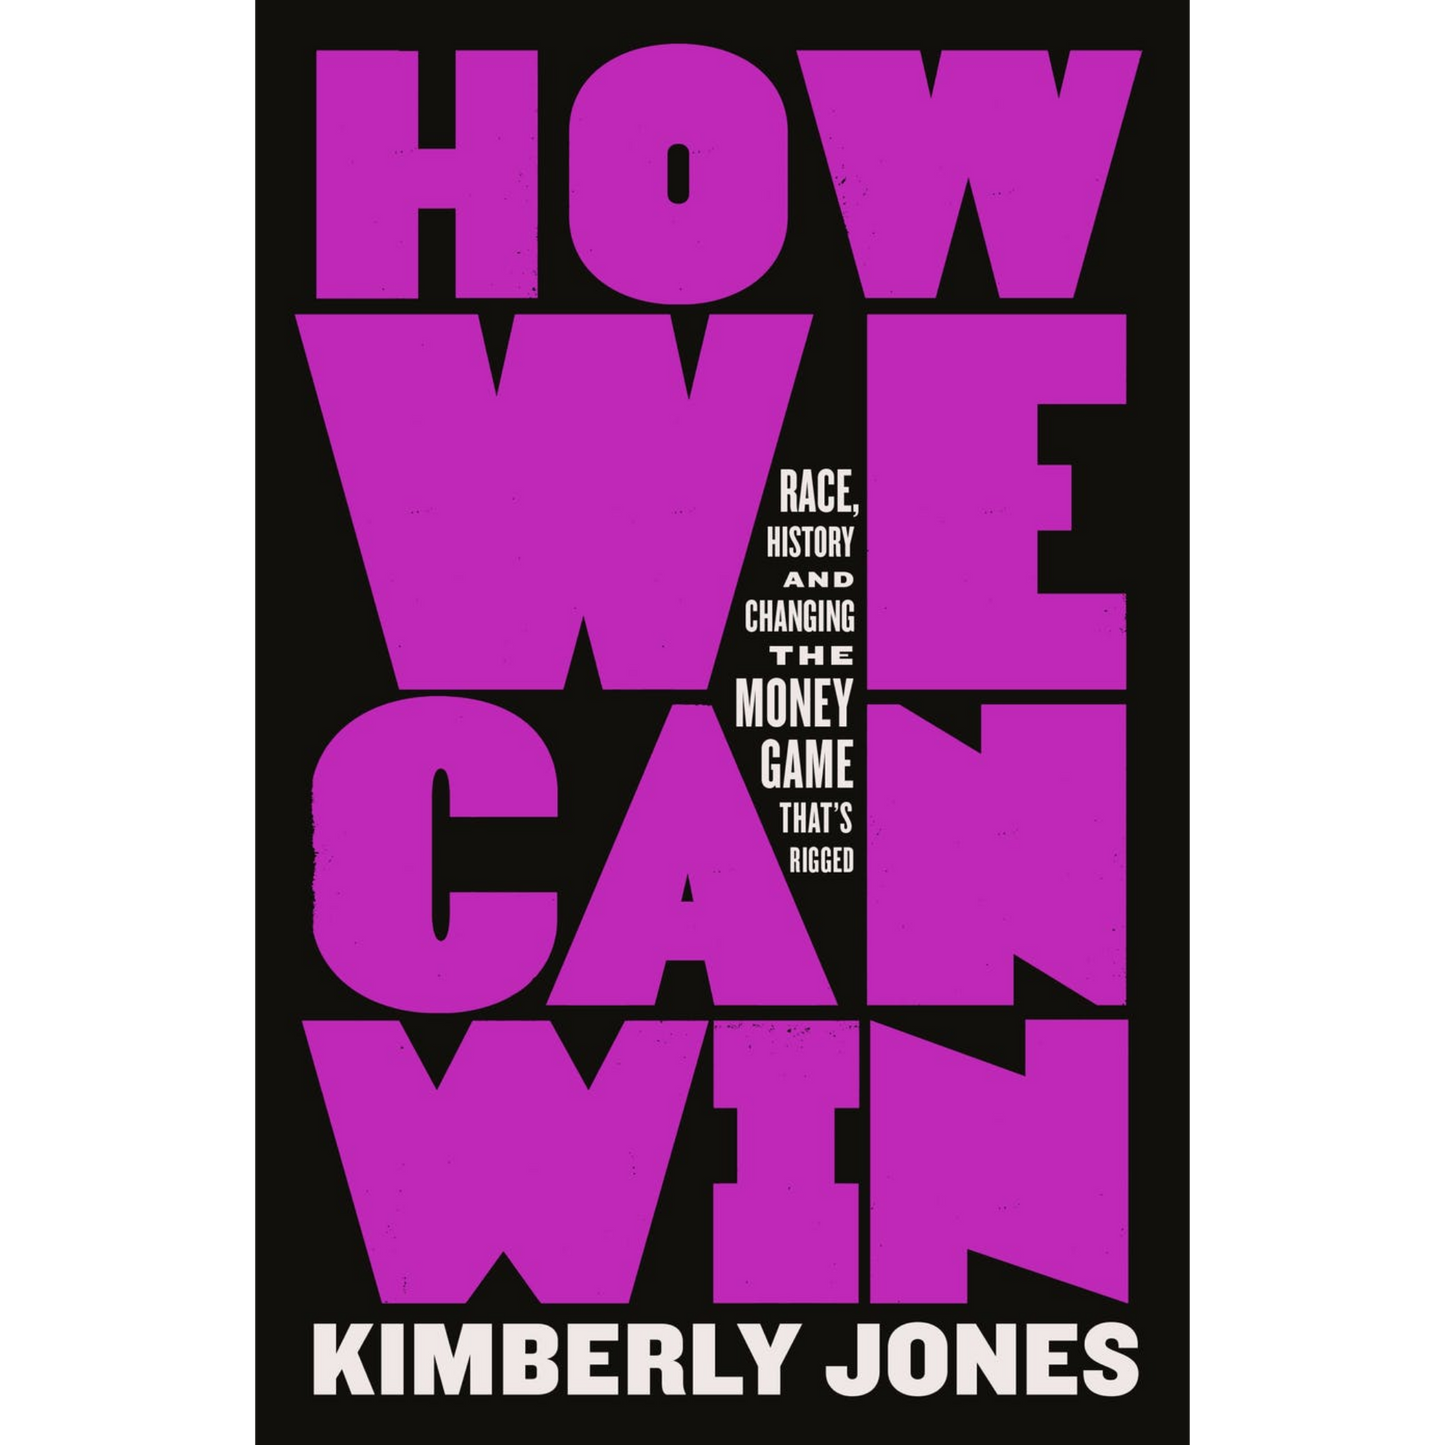 how we can win kimberly jones